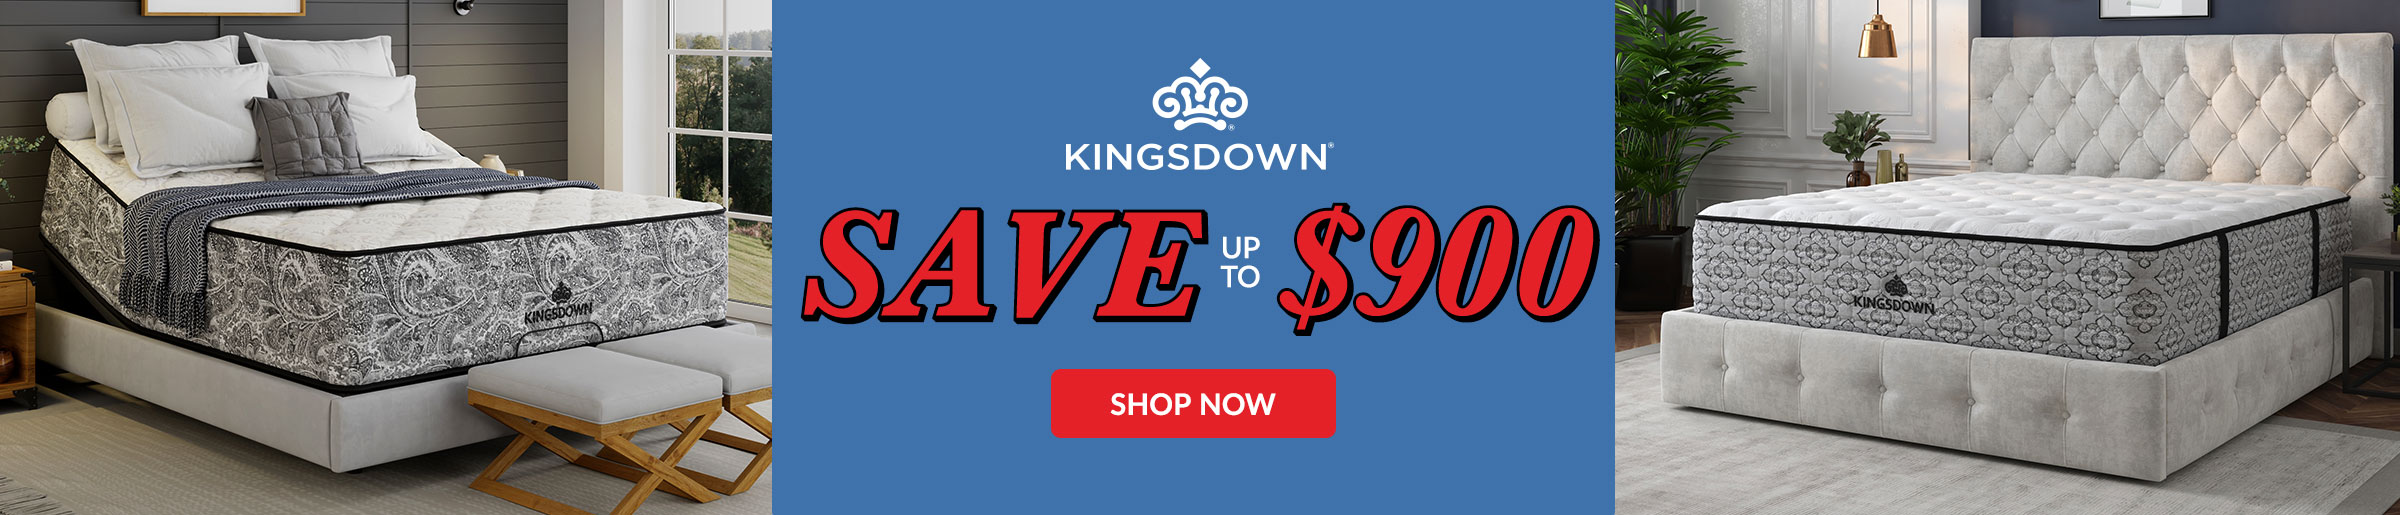 4-24 Kingsdown Desktop